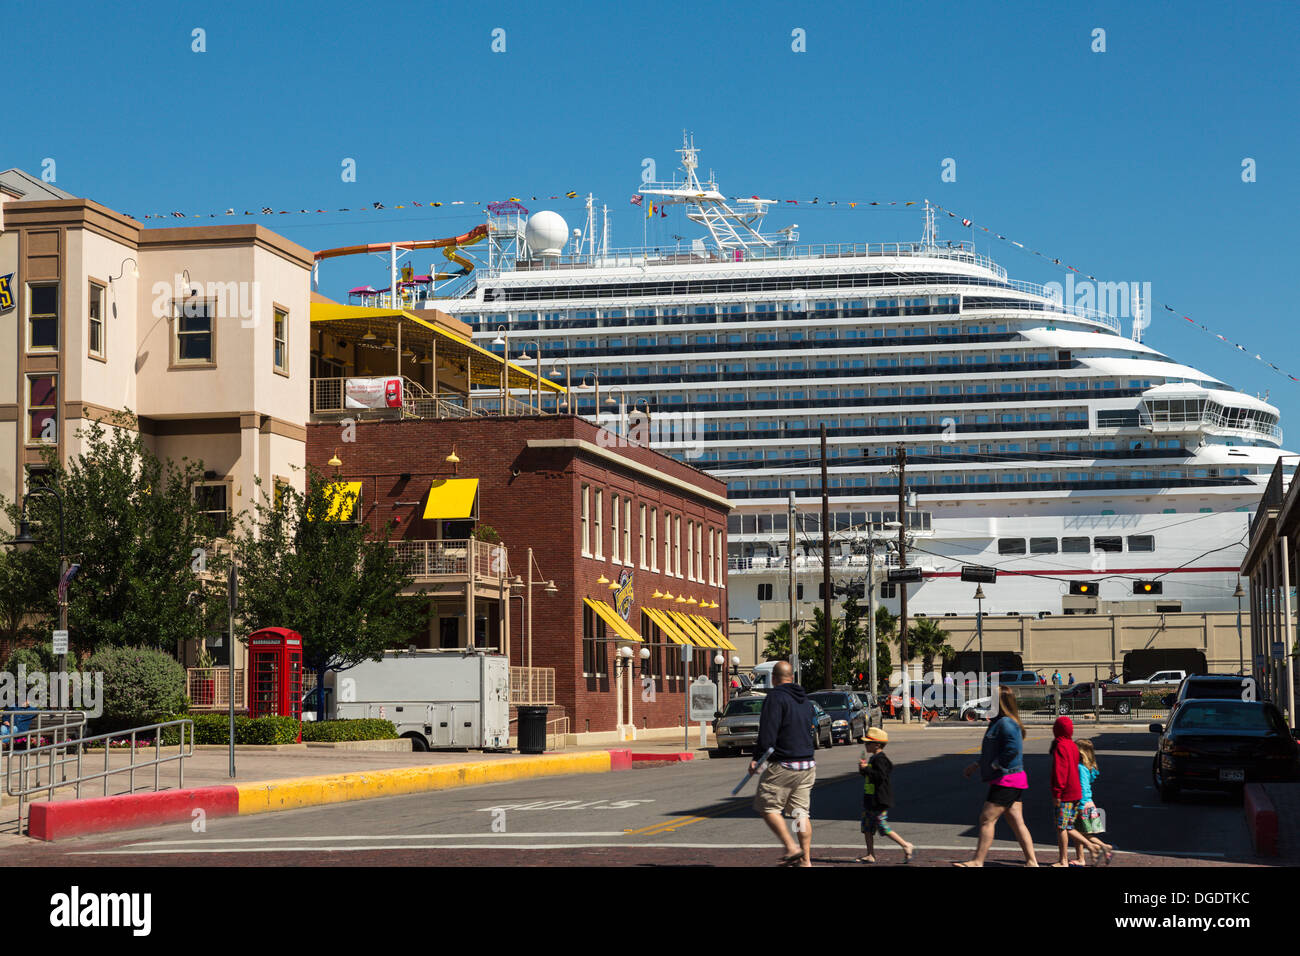 Carnival Magic cruise Schiff angedockt an einem sonnigen Tag in Galveston Texas USA Stockfoto